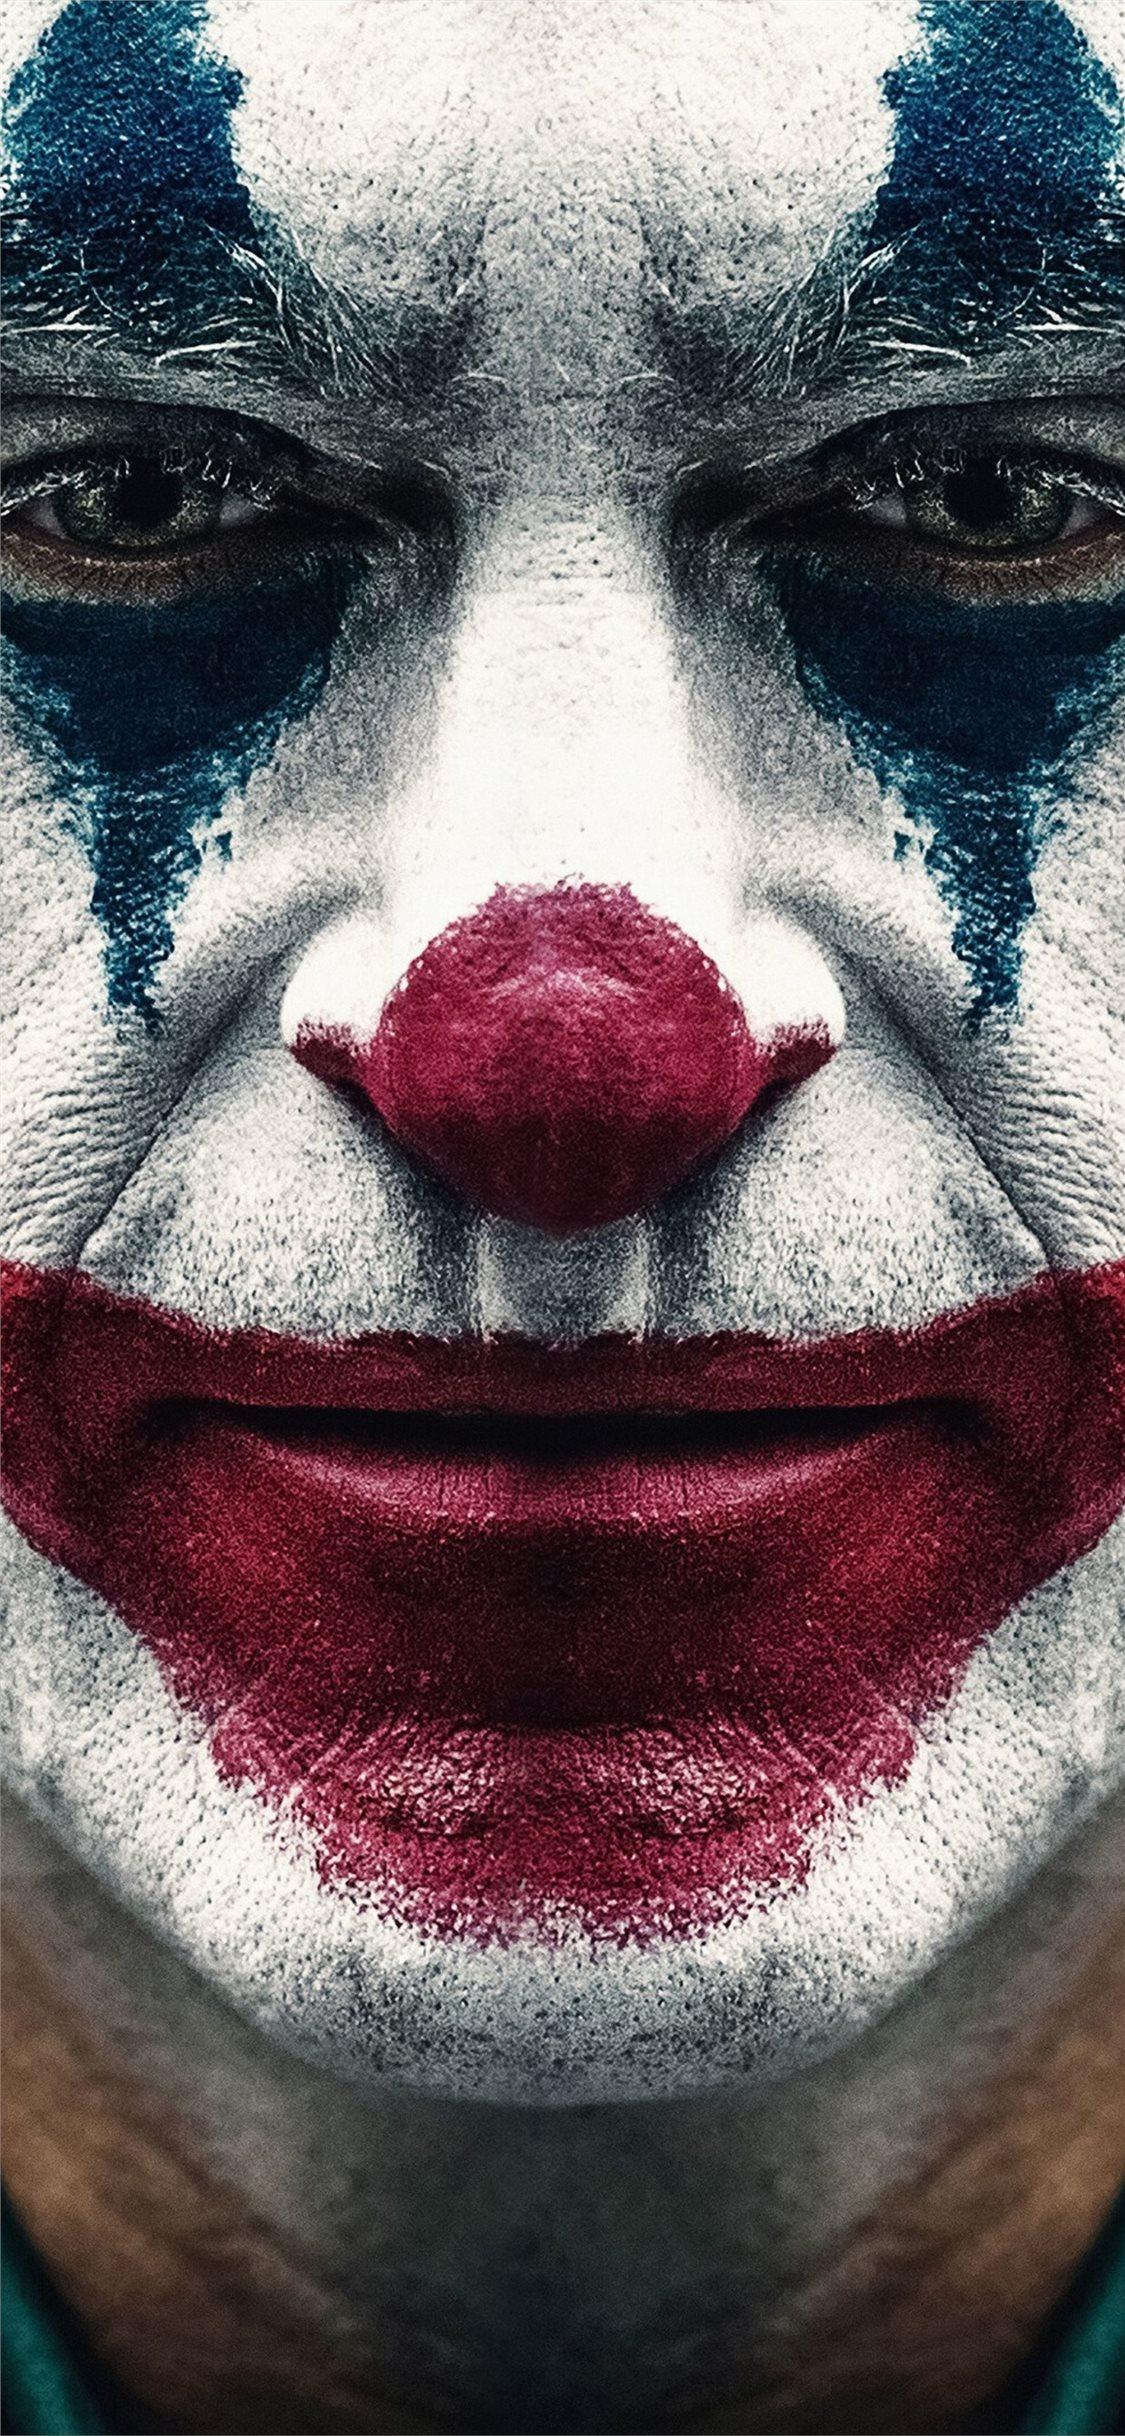 joker 2019 joaquin phoenix clown iPhone X Wallpaper Free